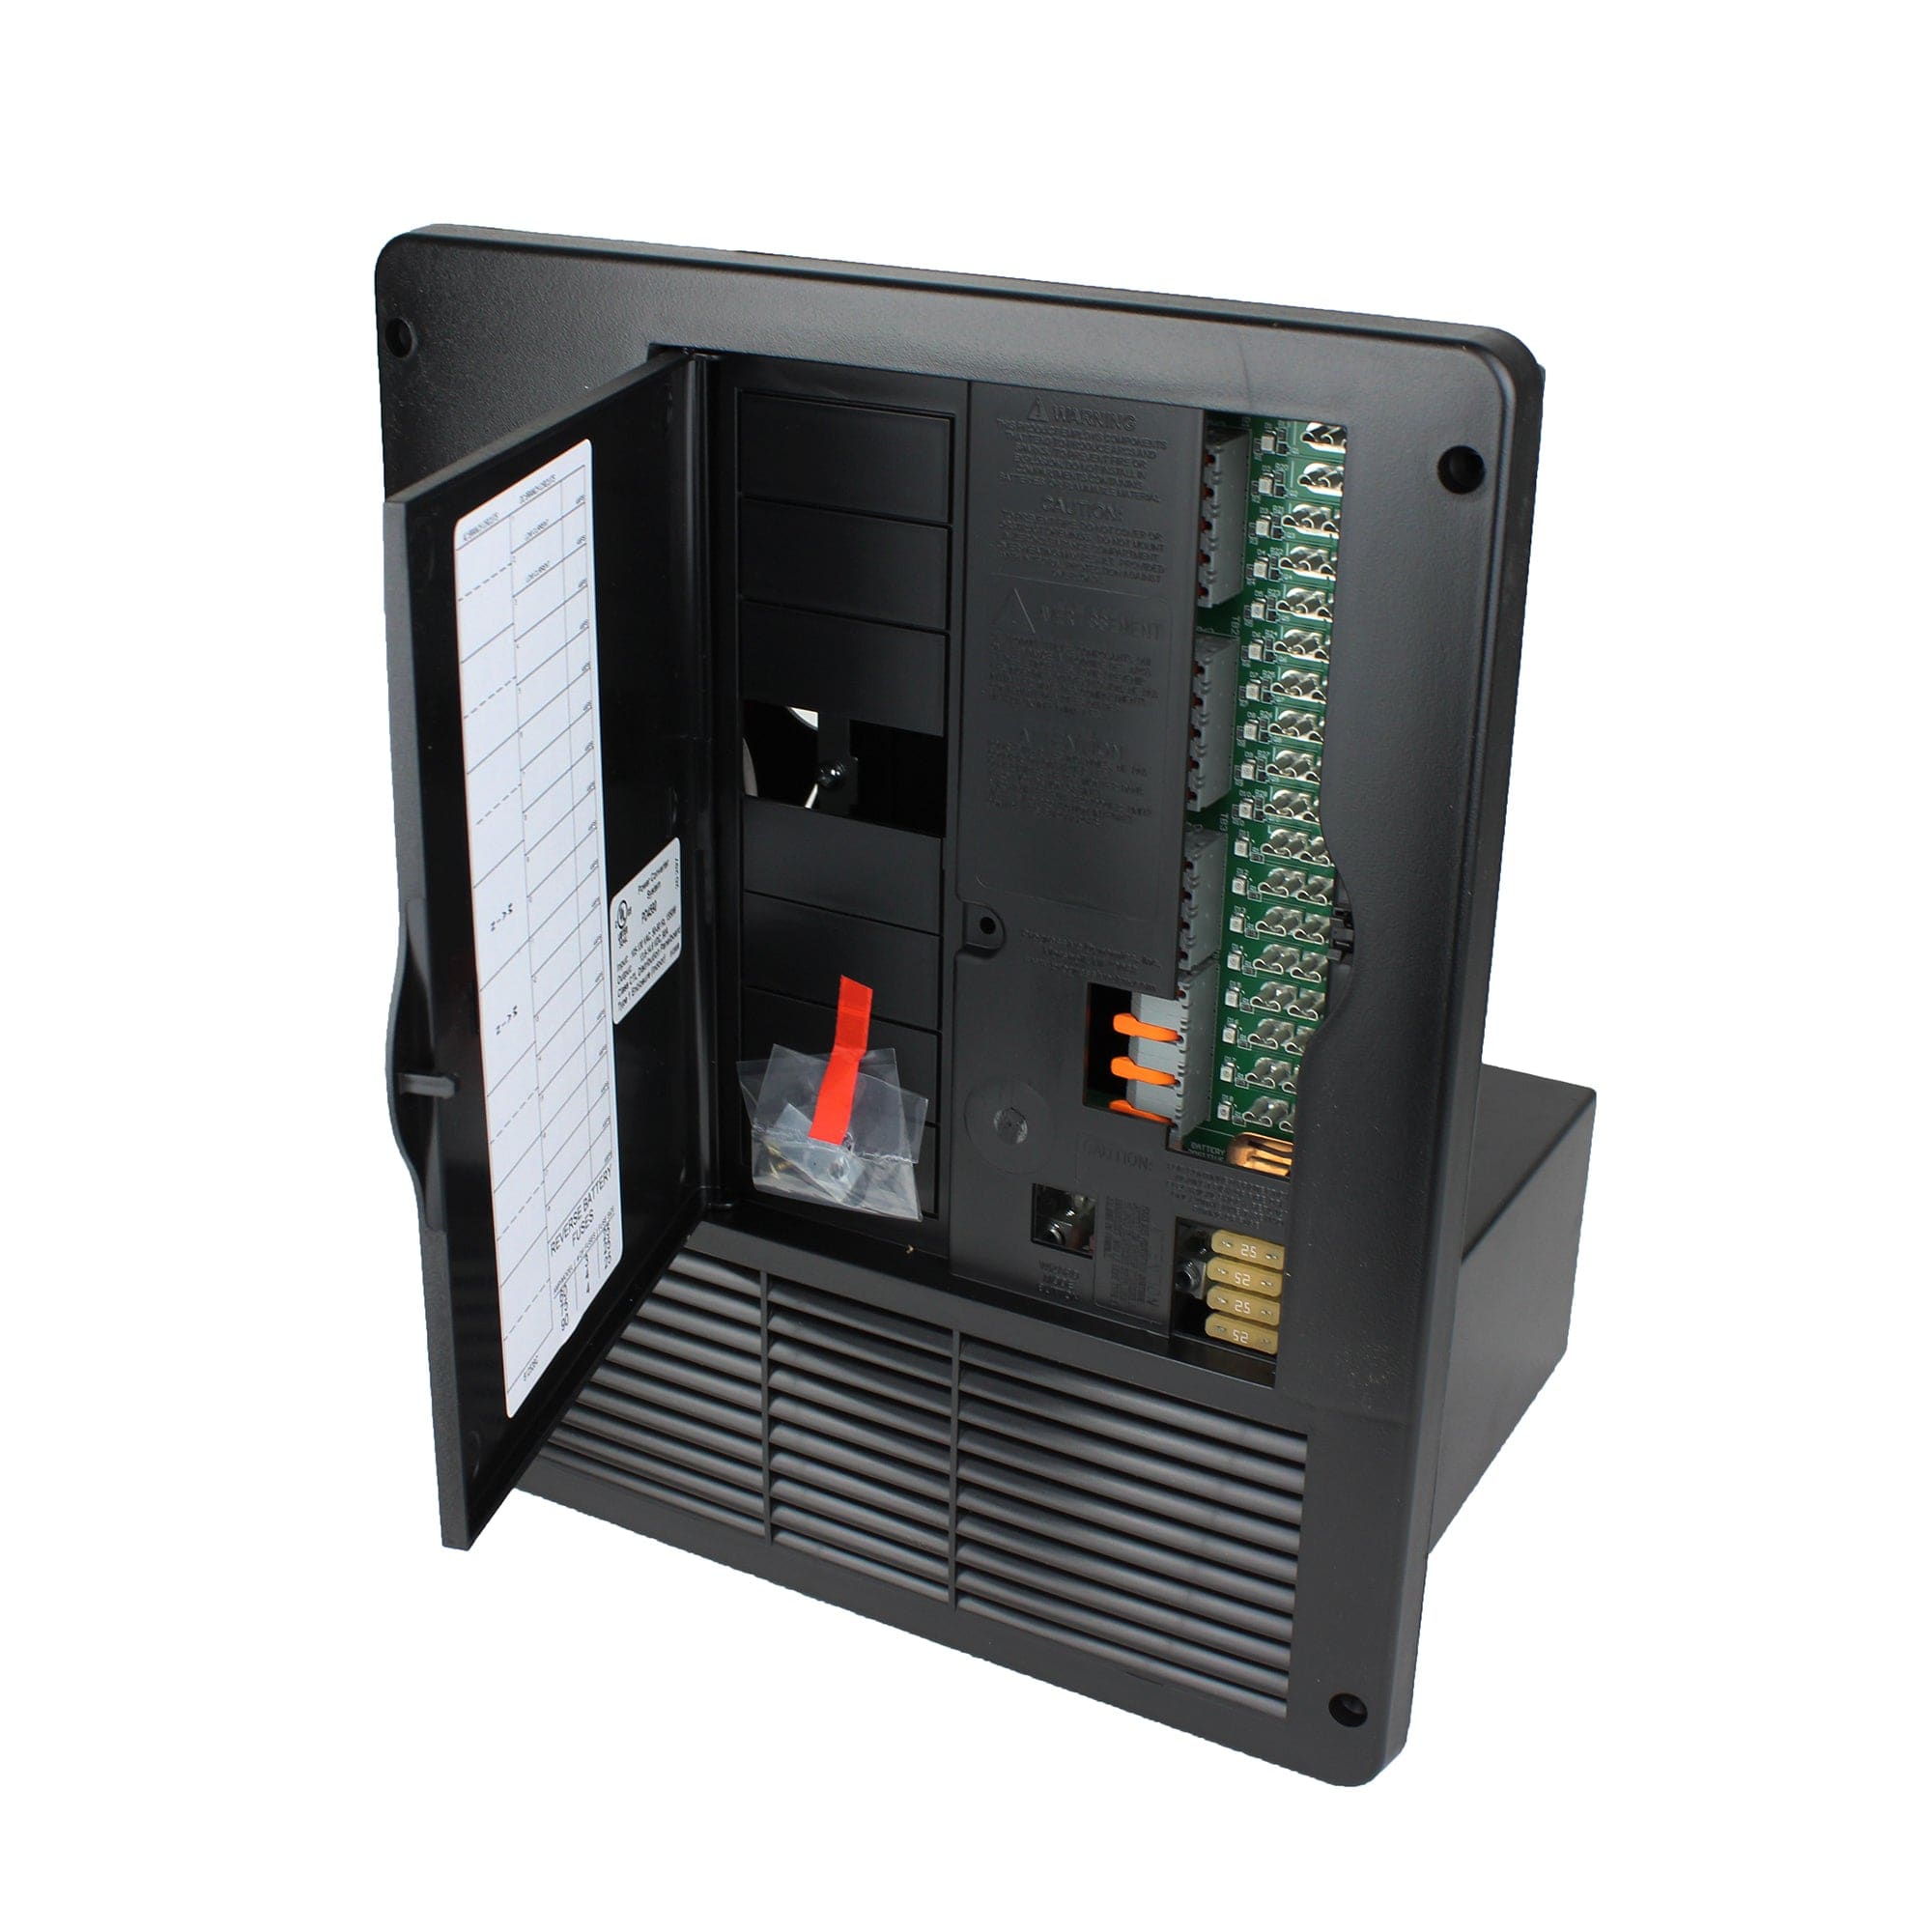 Progressive Dynamics PD4590AV Inteli Power 240V 50A Distribution Panel/90A Converter W/ Lithium Switch